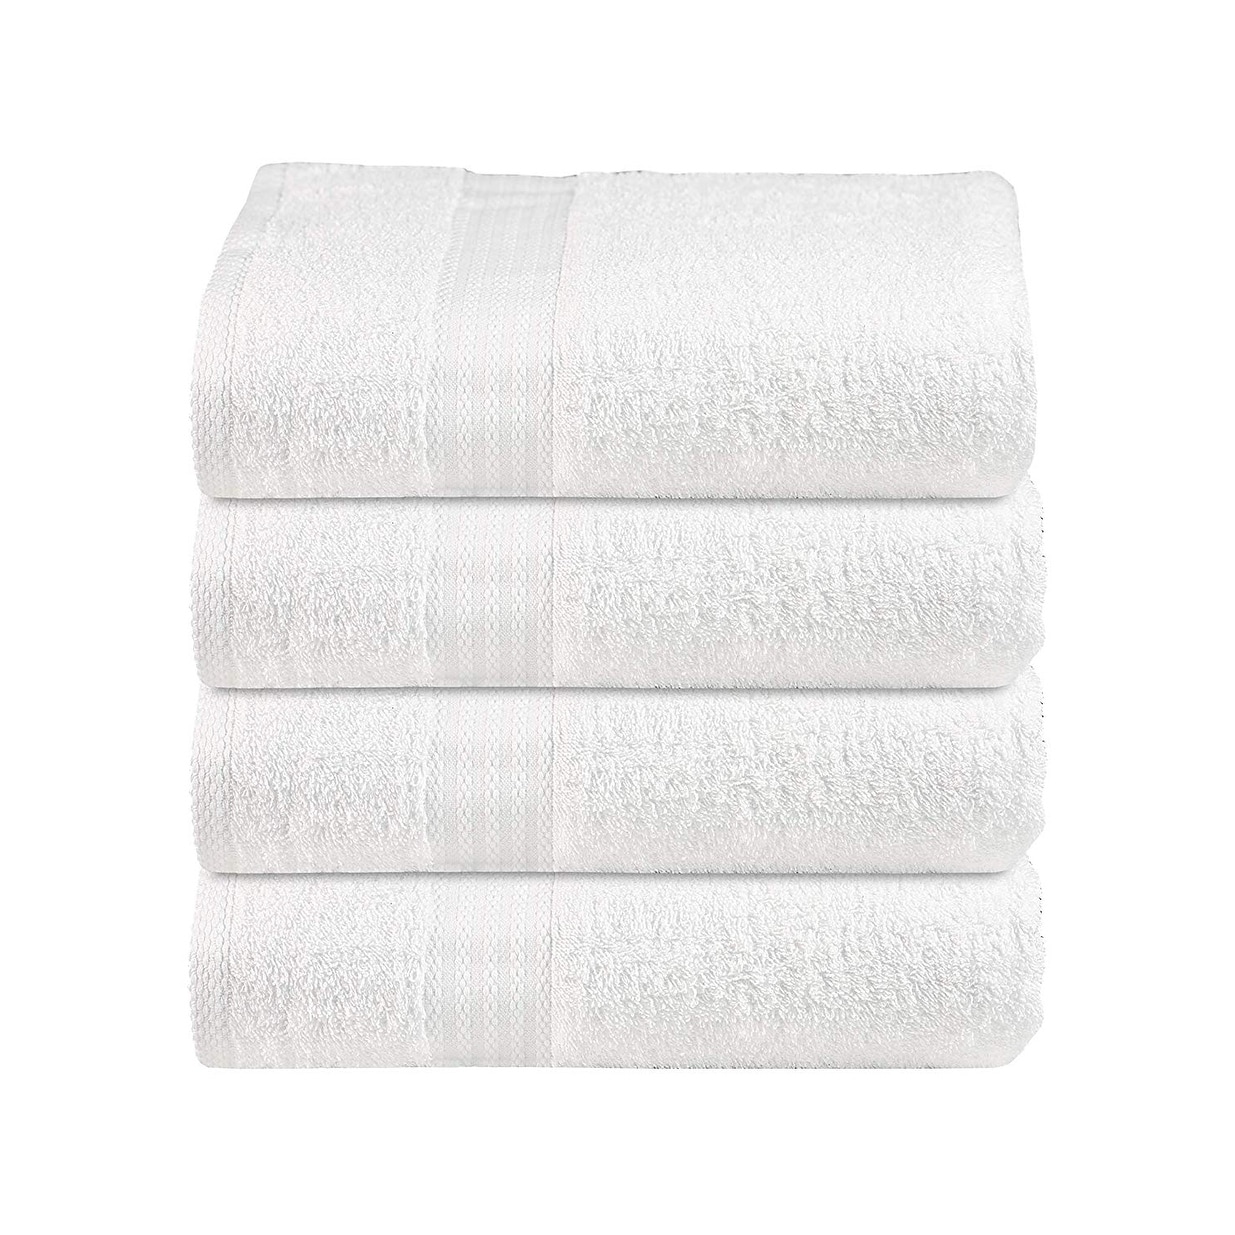 https://ak1.ostkcdn.com/images/products/30363975/Glamburg-Premium-Cotton-4-Pack-Bath-Towel-Set-100-Pure-Cotton-4-Bath-Towels-27x54-Ultra-Soft-Highly-Absorbent-67bb9f7c-df9e-493e-a4f0-9662f7f4ad97.jpg